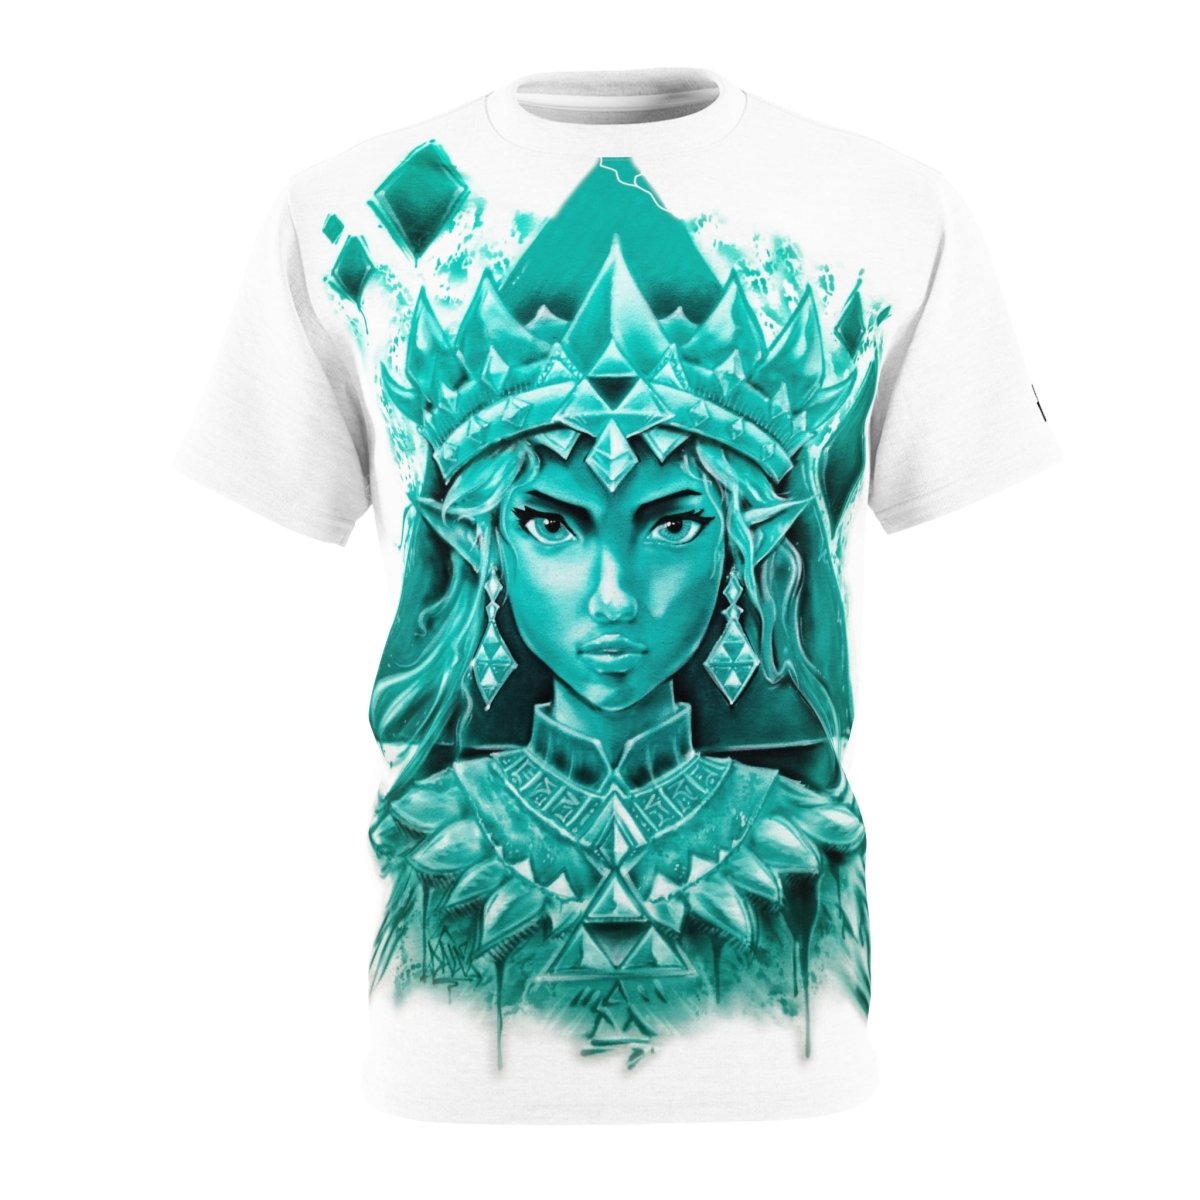 Princess TLOZ T Shirt Customizable Airbrush T shirt Design from Airbrush Customs x Dale The Airbrush Guy